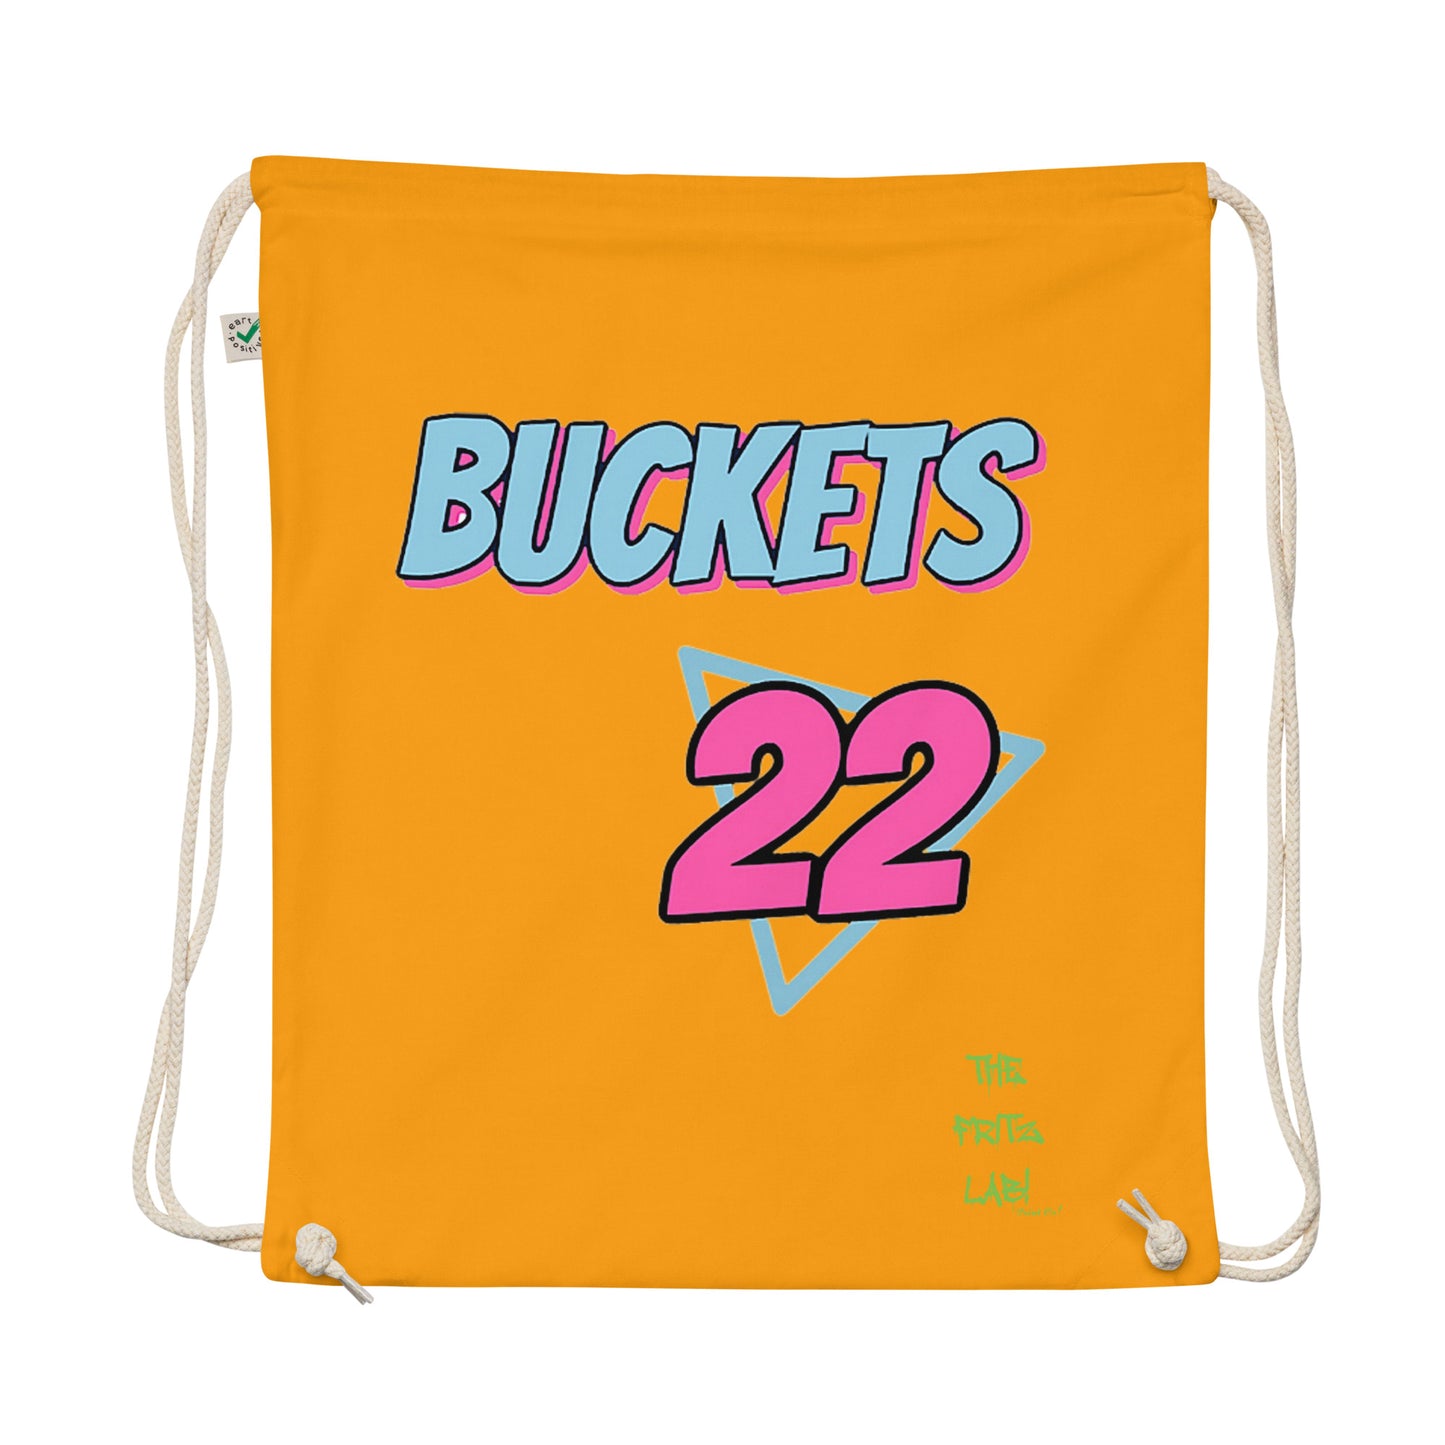 Buckets 22 drawstring bag